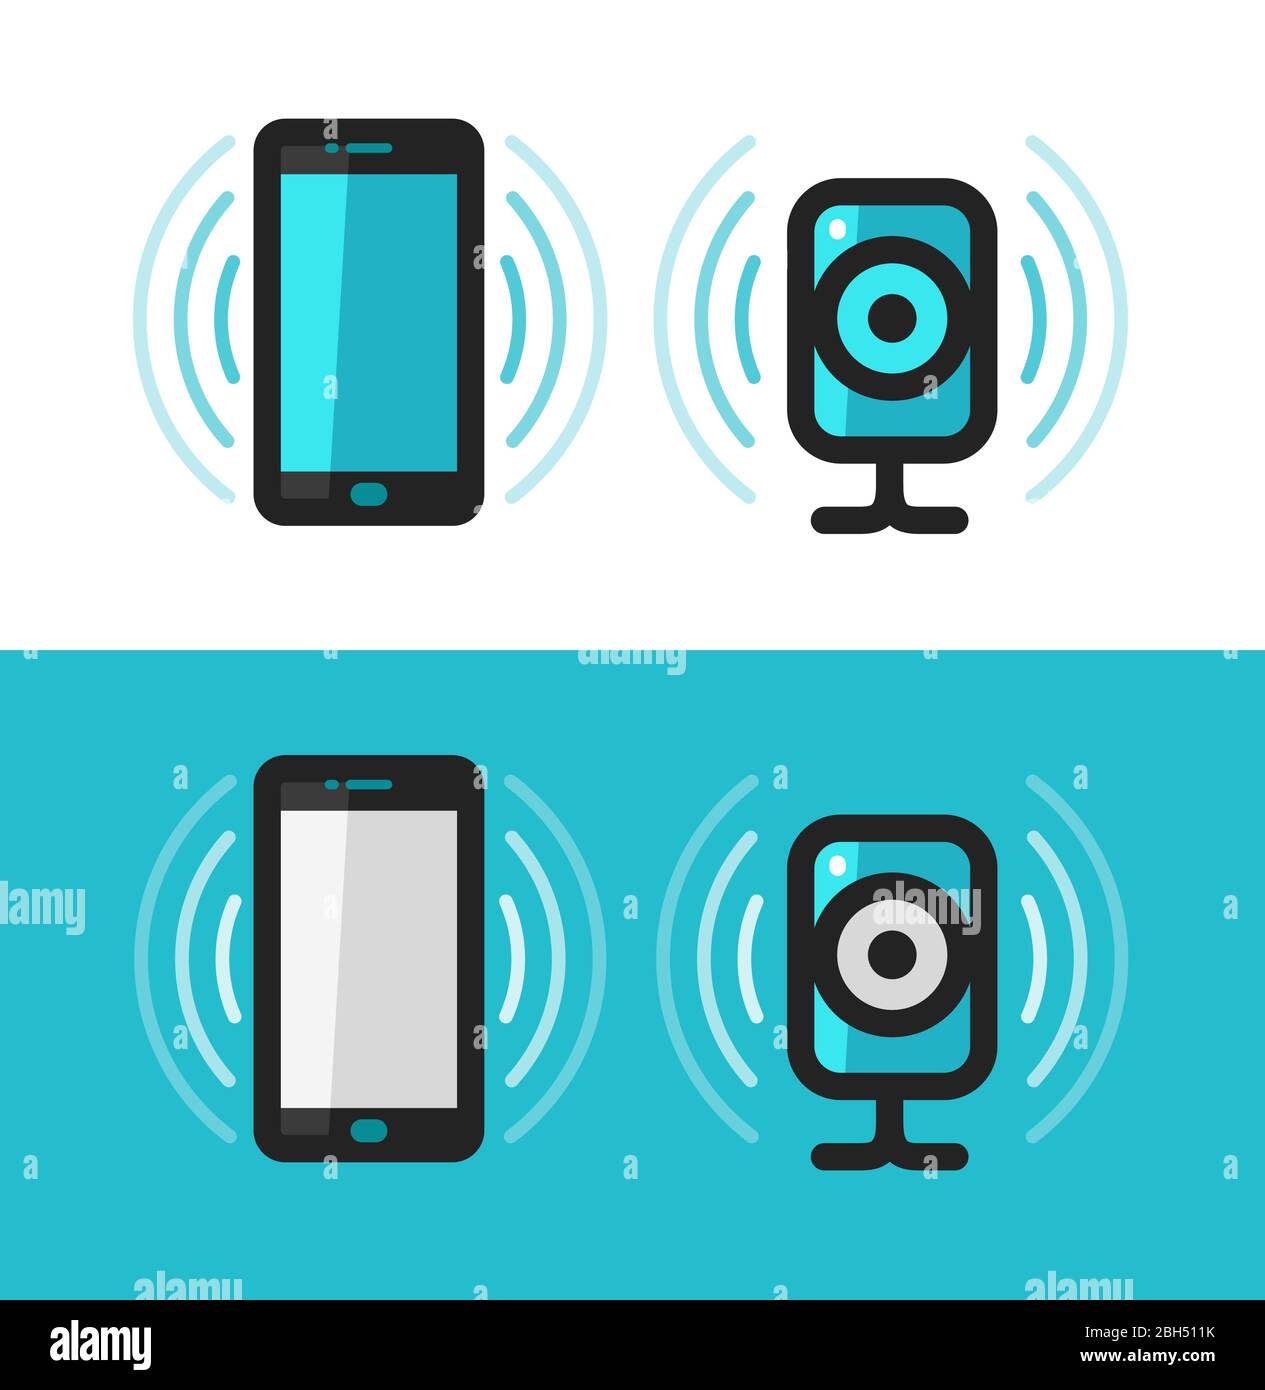 Smartphone, phone, webcam icon. Communication vector illustration Stock Vector